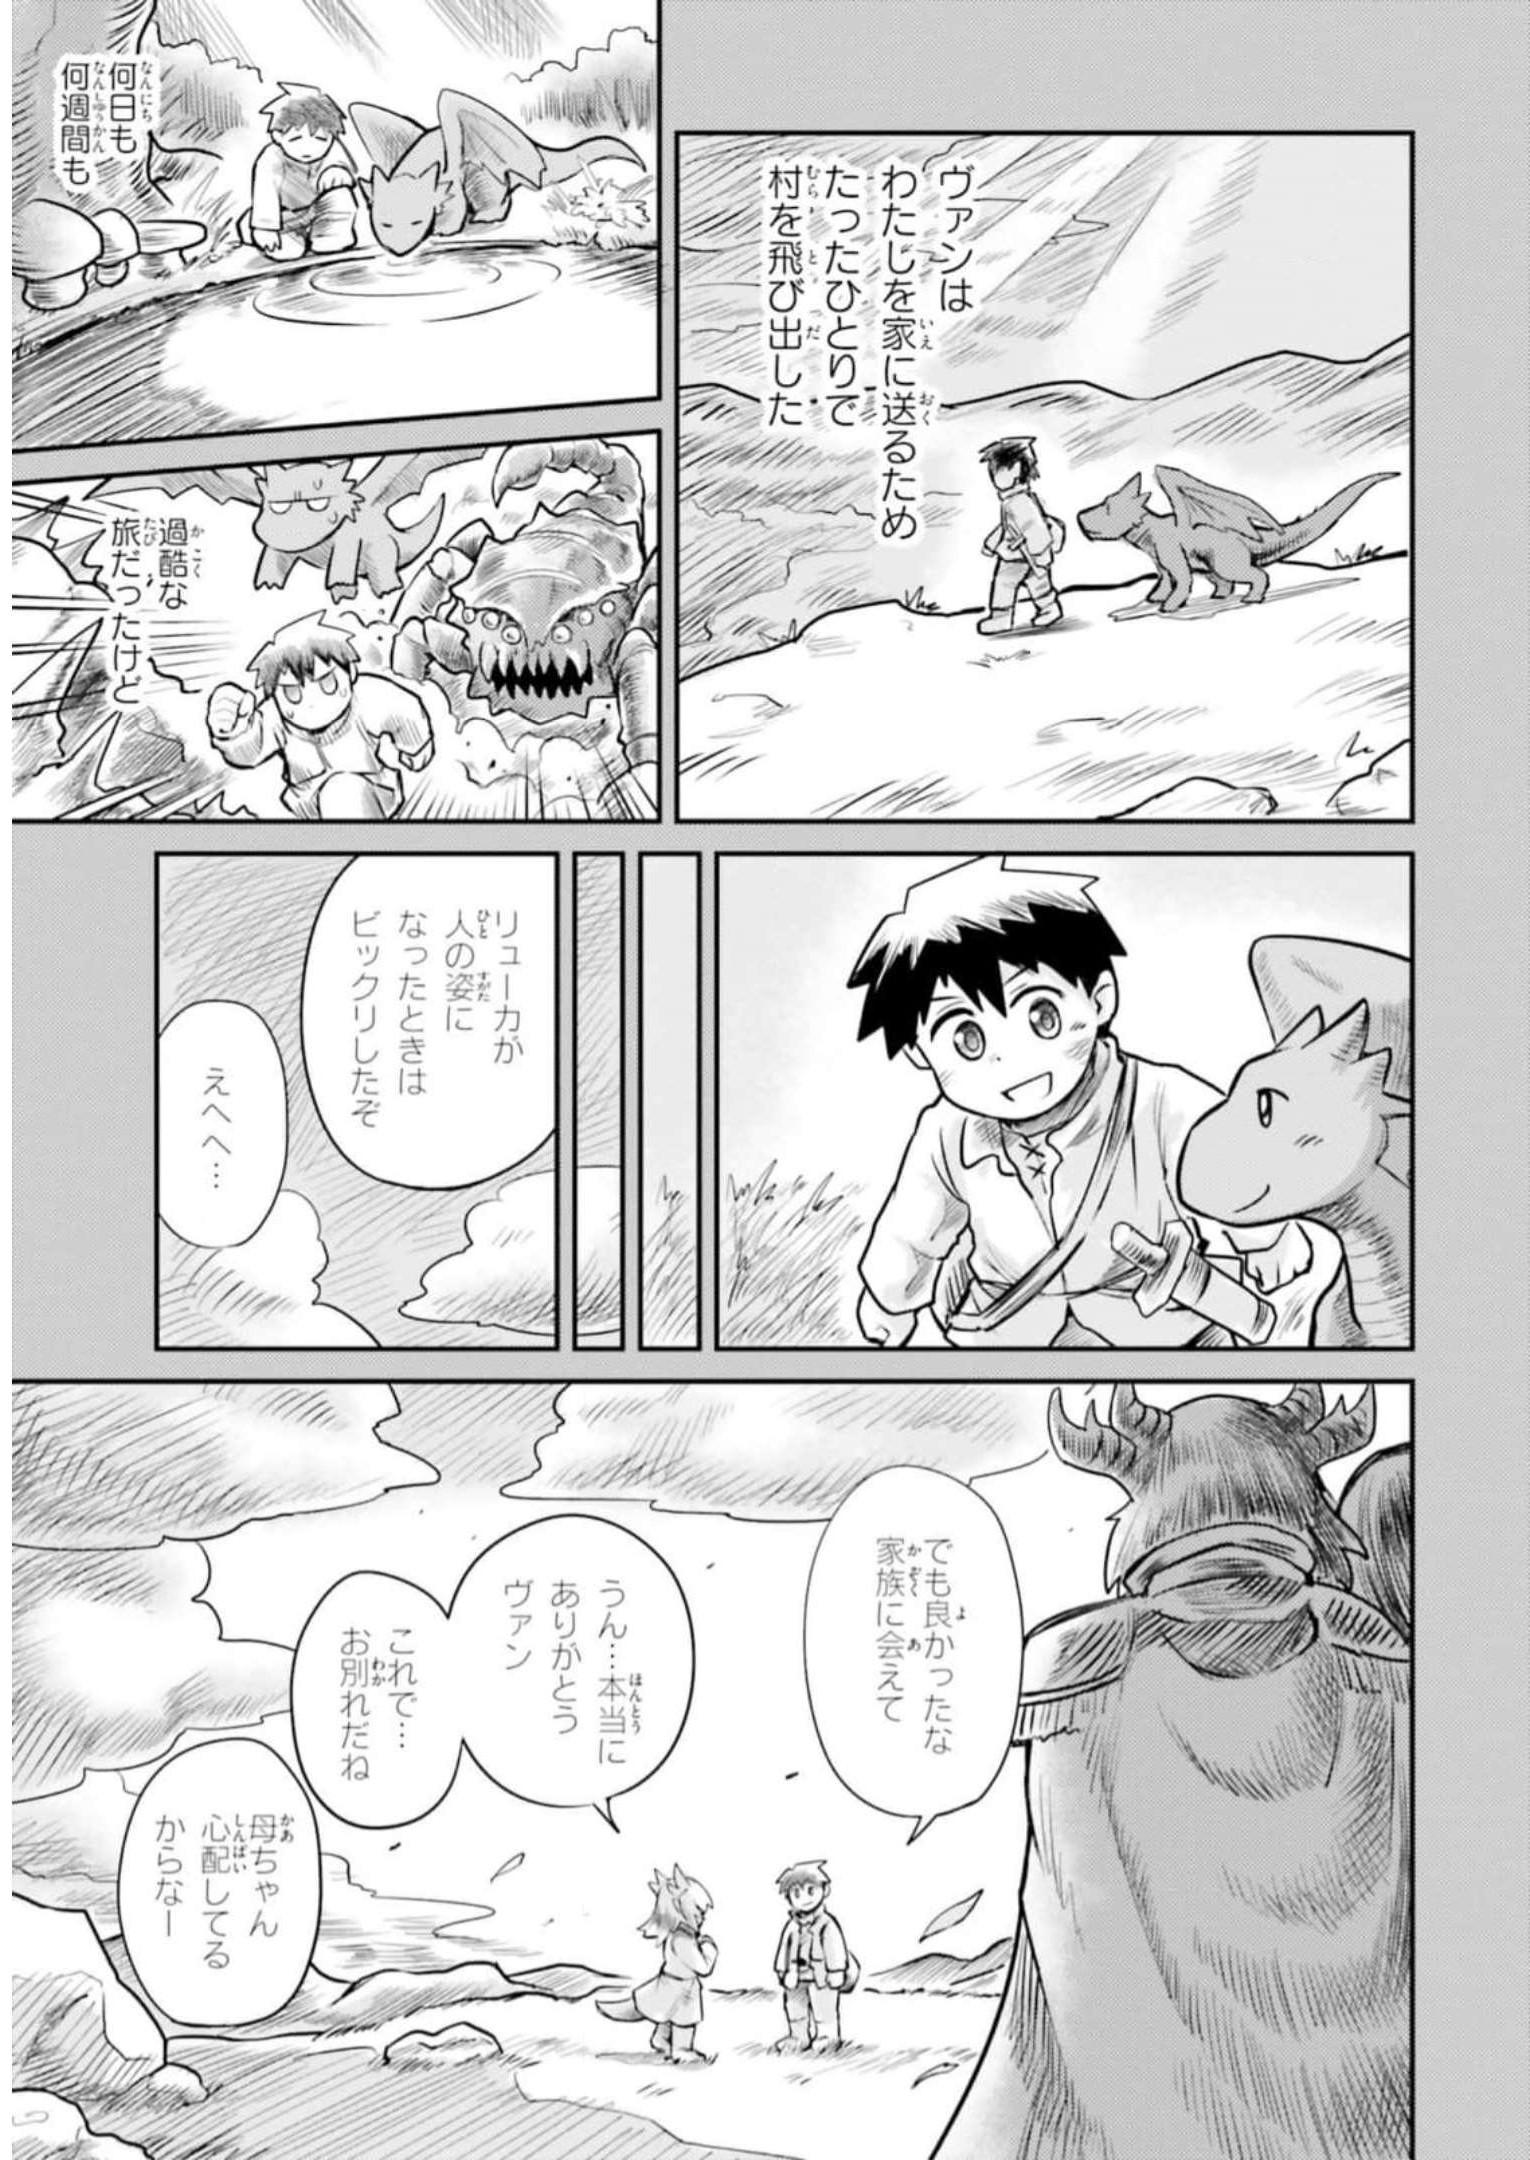 Dungeon no Osananajimi - Chapter 2 - Page 5